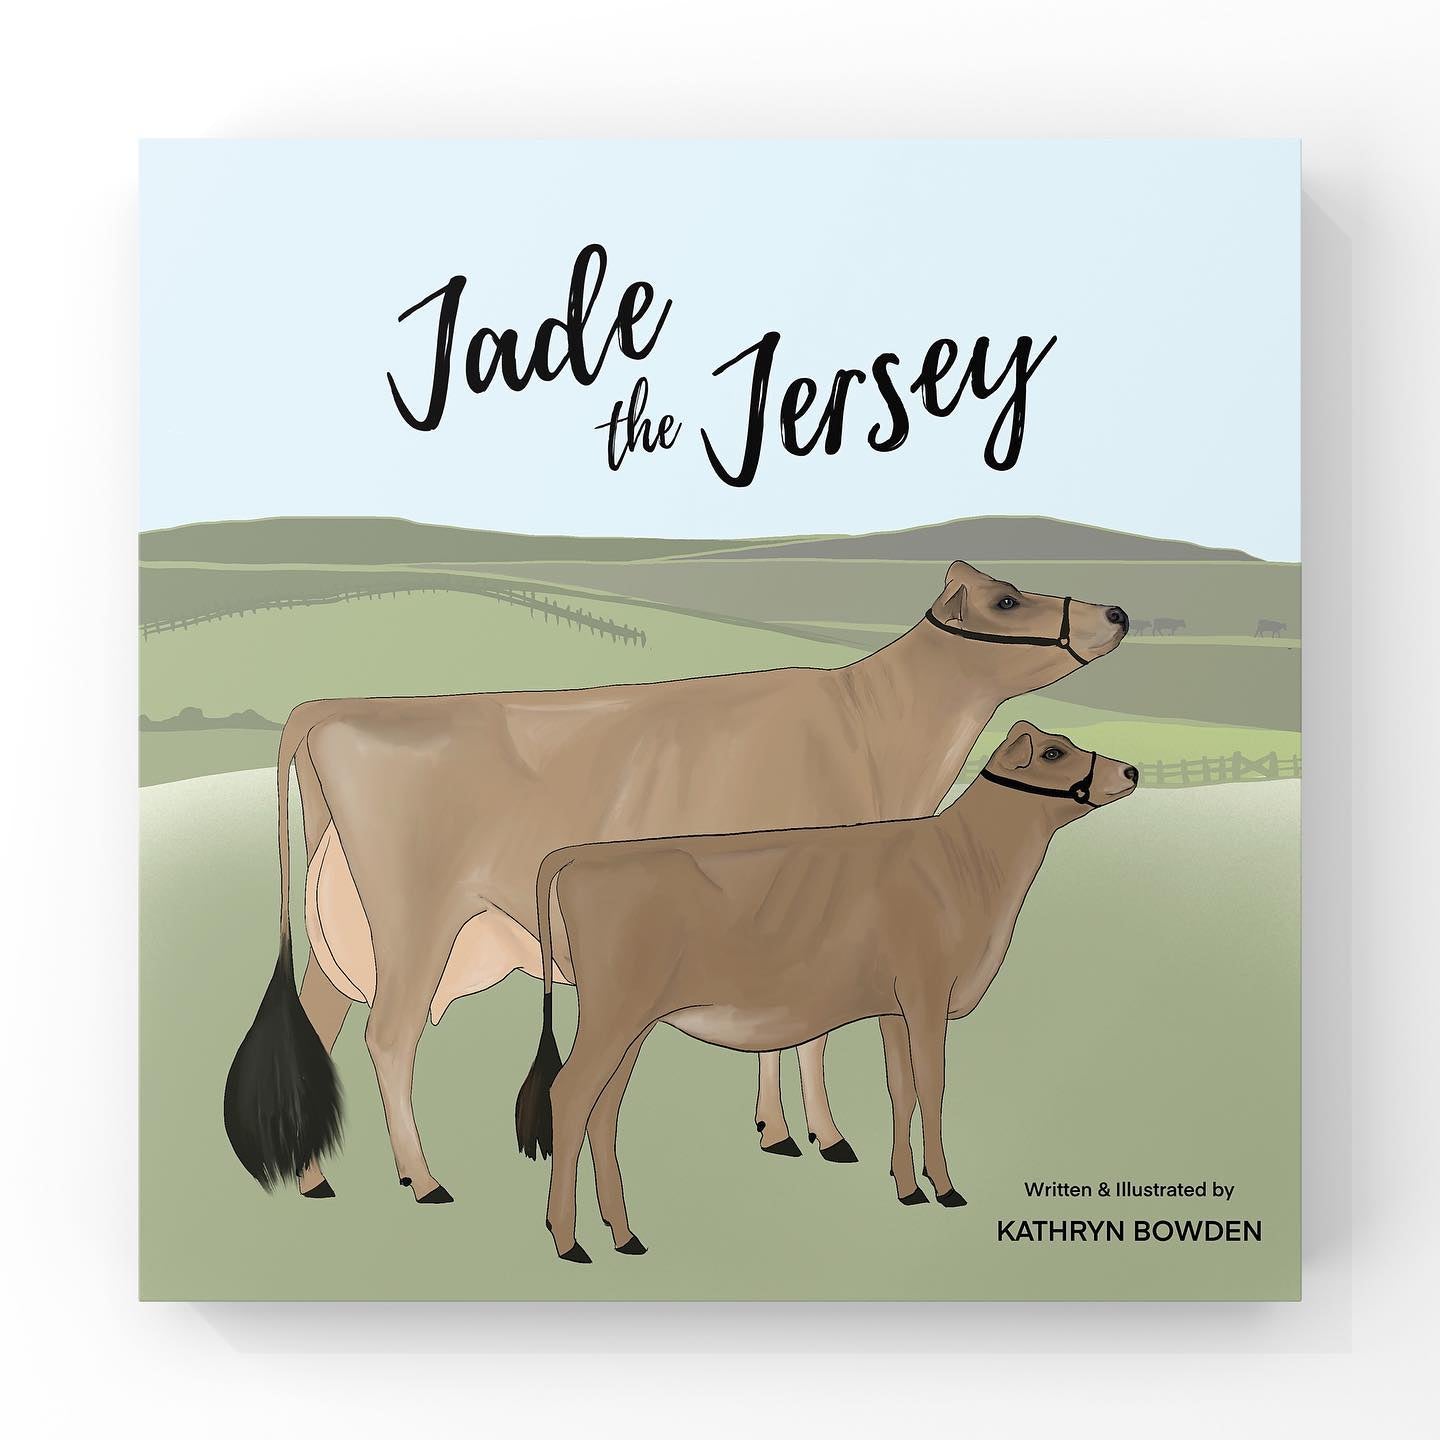 Jade the Jersey book